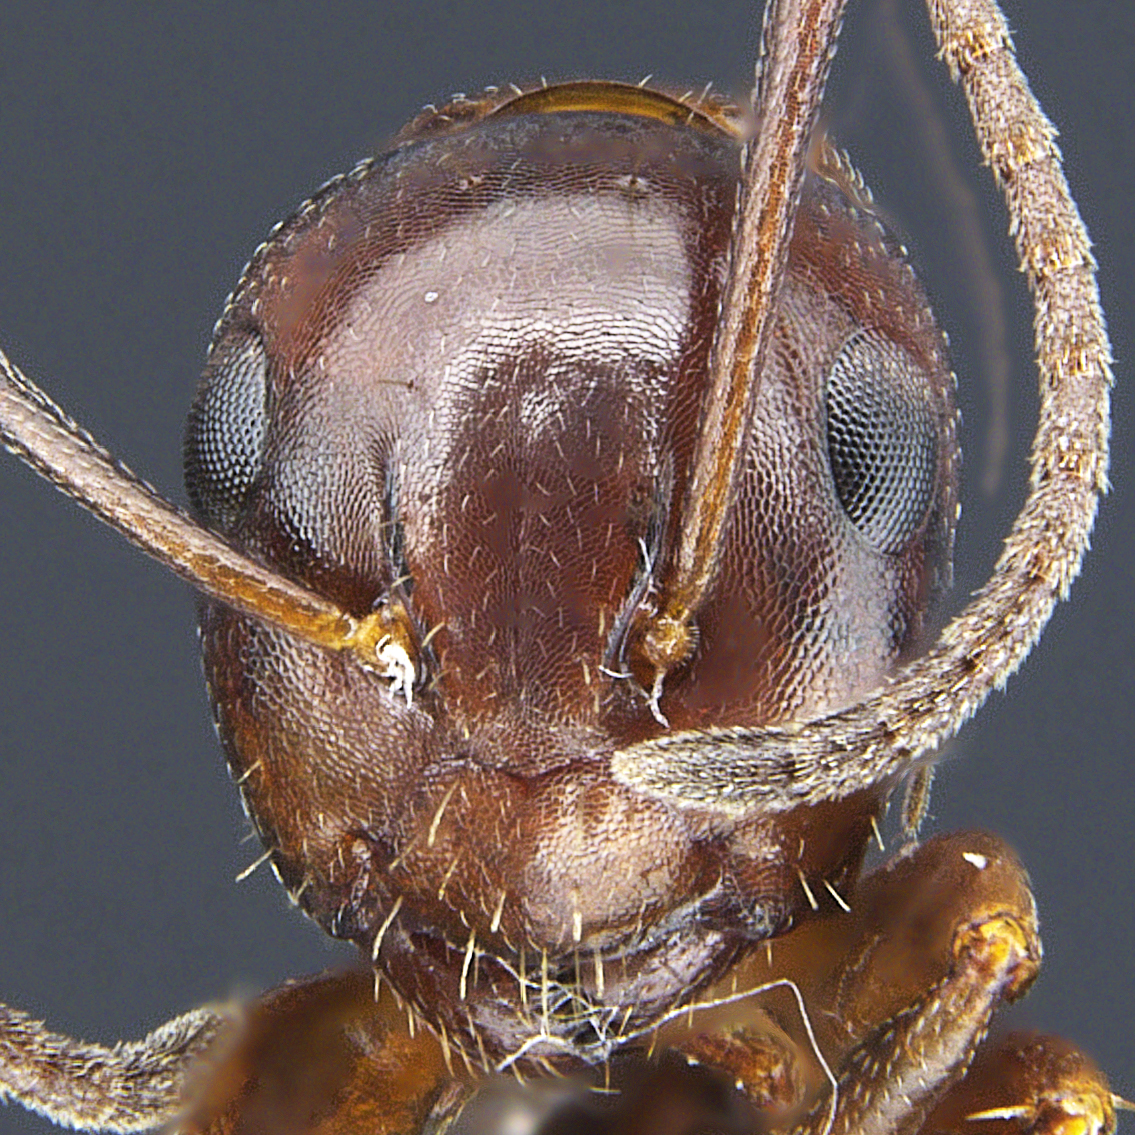 Full-face view 09 Camponotus lighti